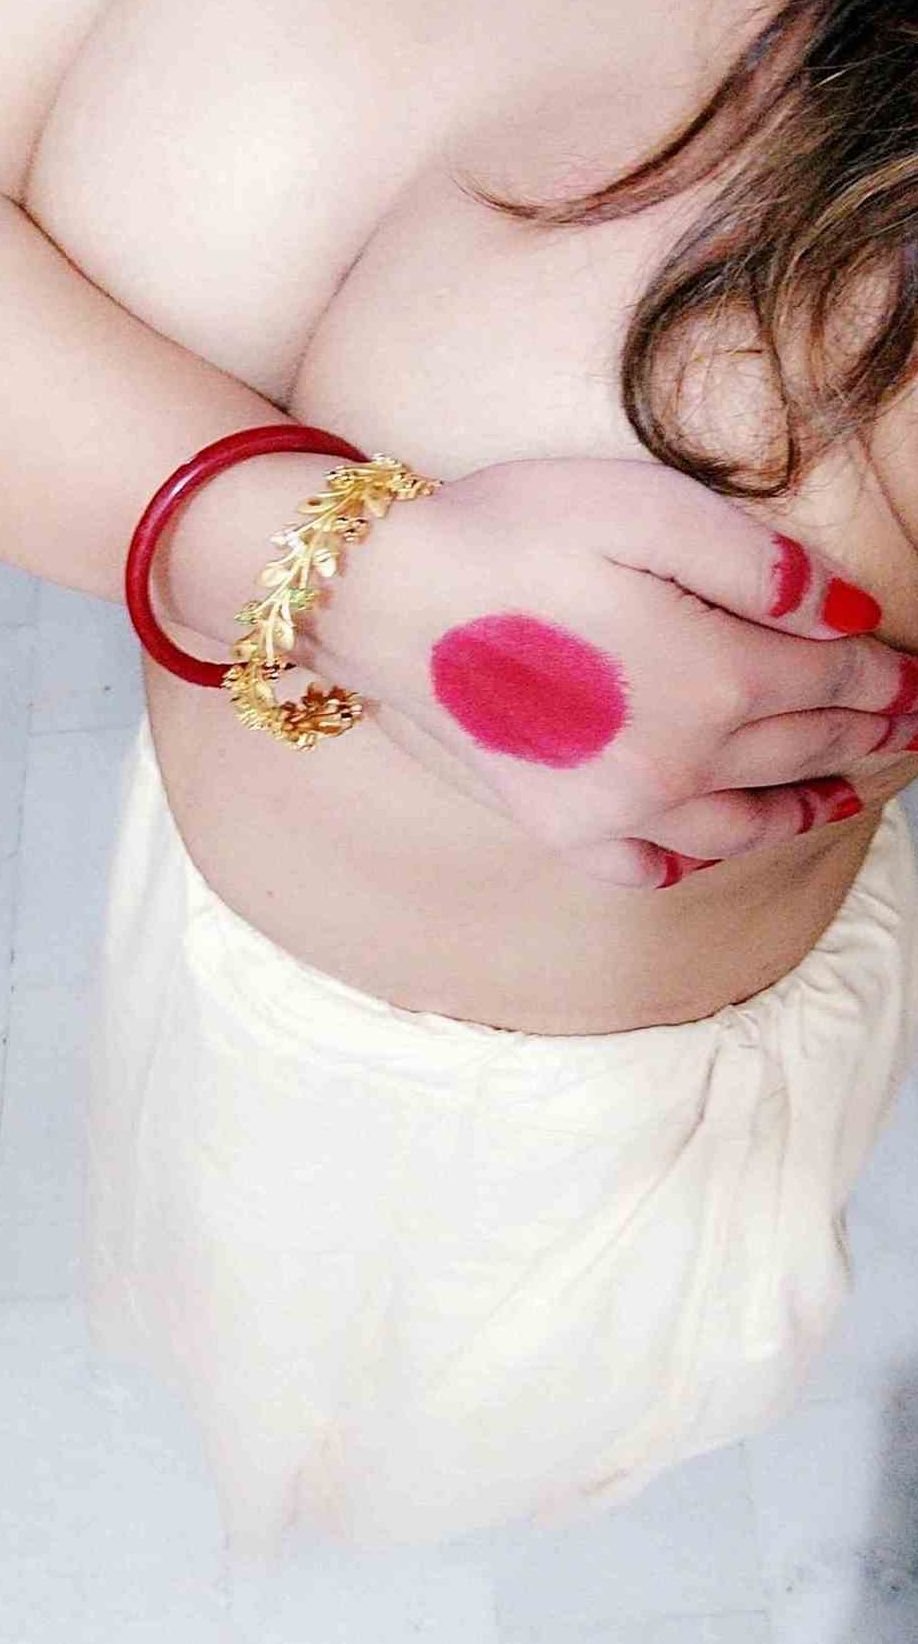 Girls teens nude in Pune